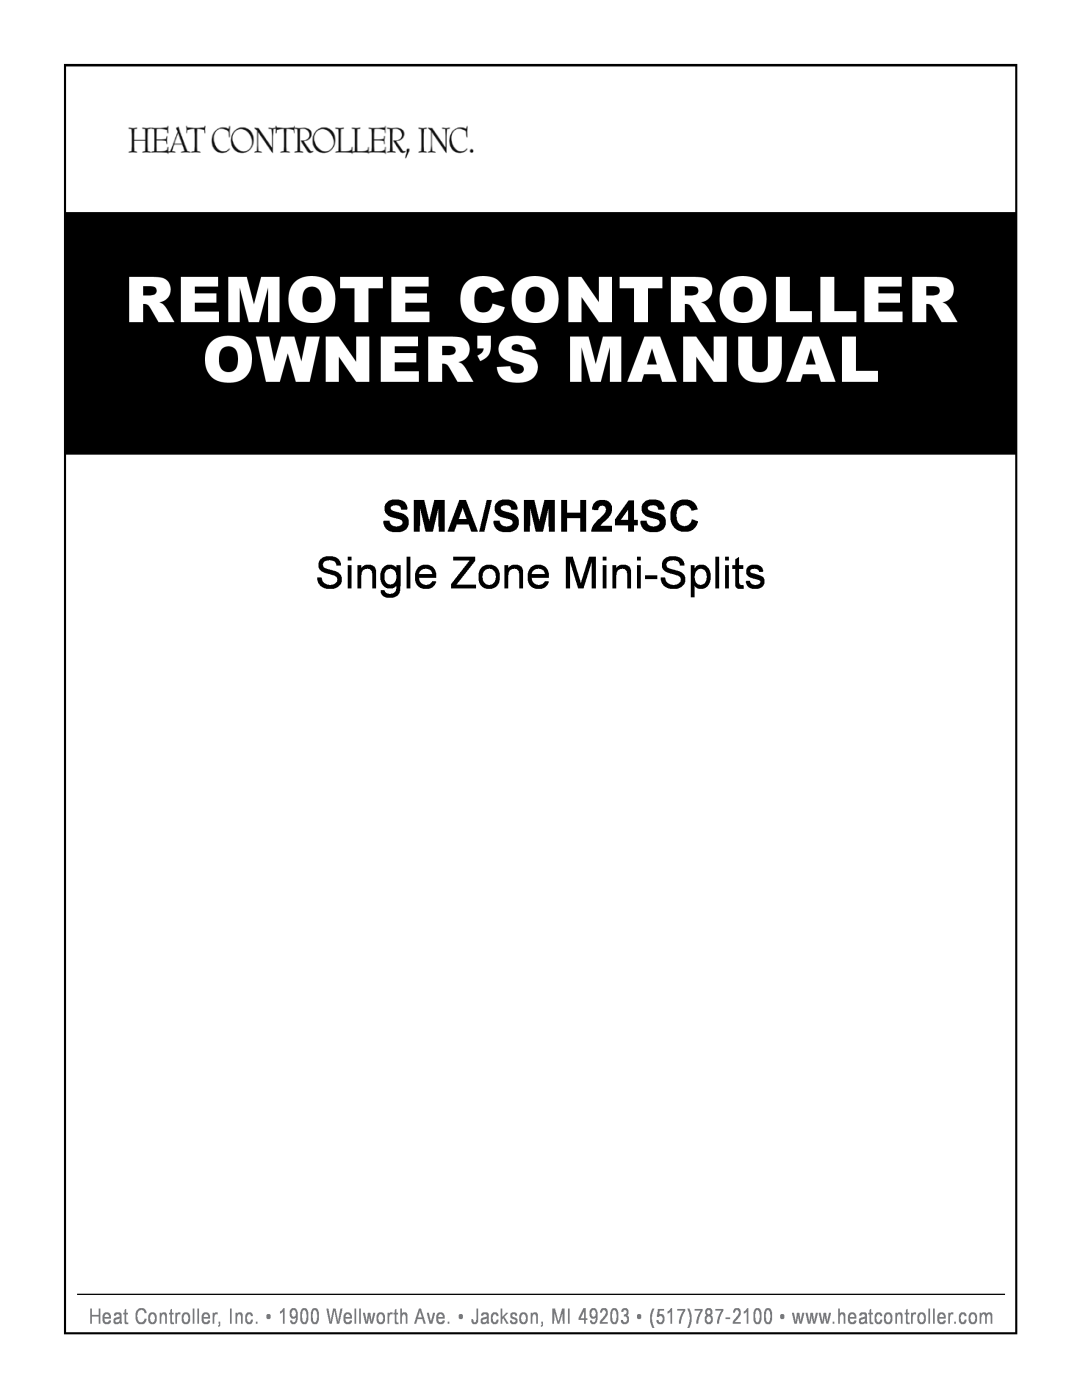 Heat Controller SMA24SC owner manual SMA/SMH24SC, Single Zone Mini-Splits 